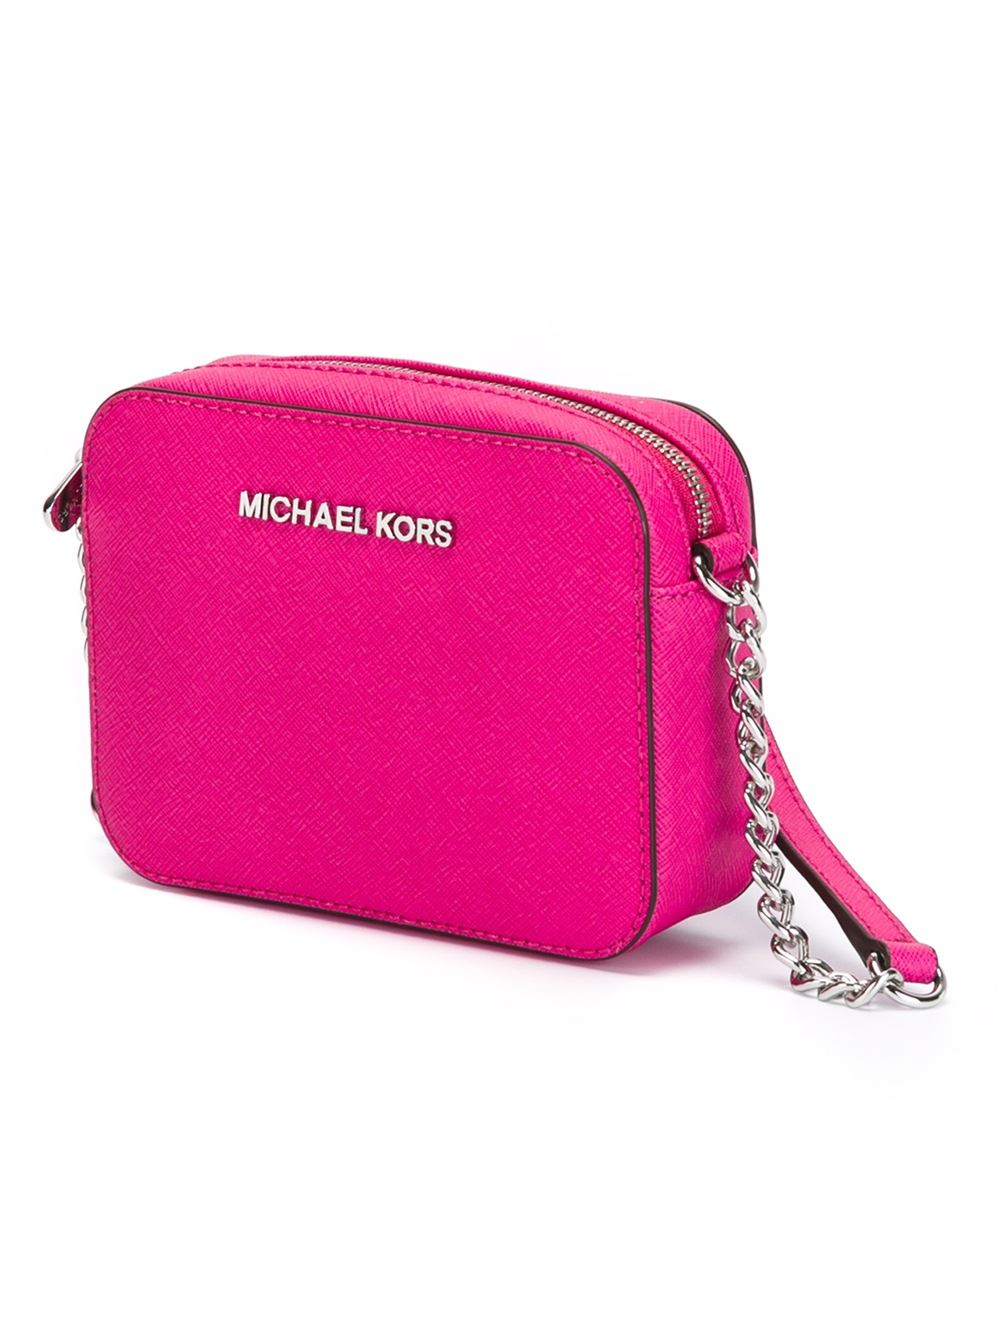 MICHAEL Michael Kors Jet Set Travel Mini Cross-Body Bag in Pink - Lyst